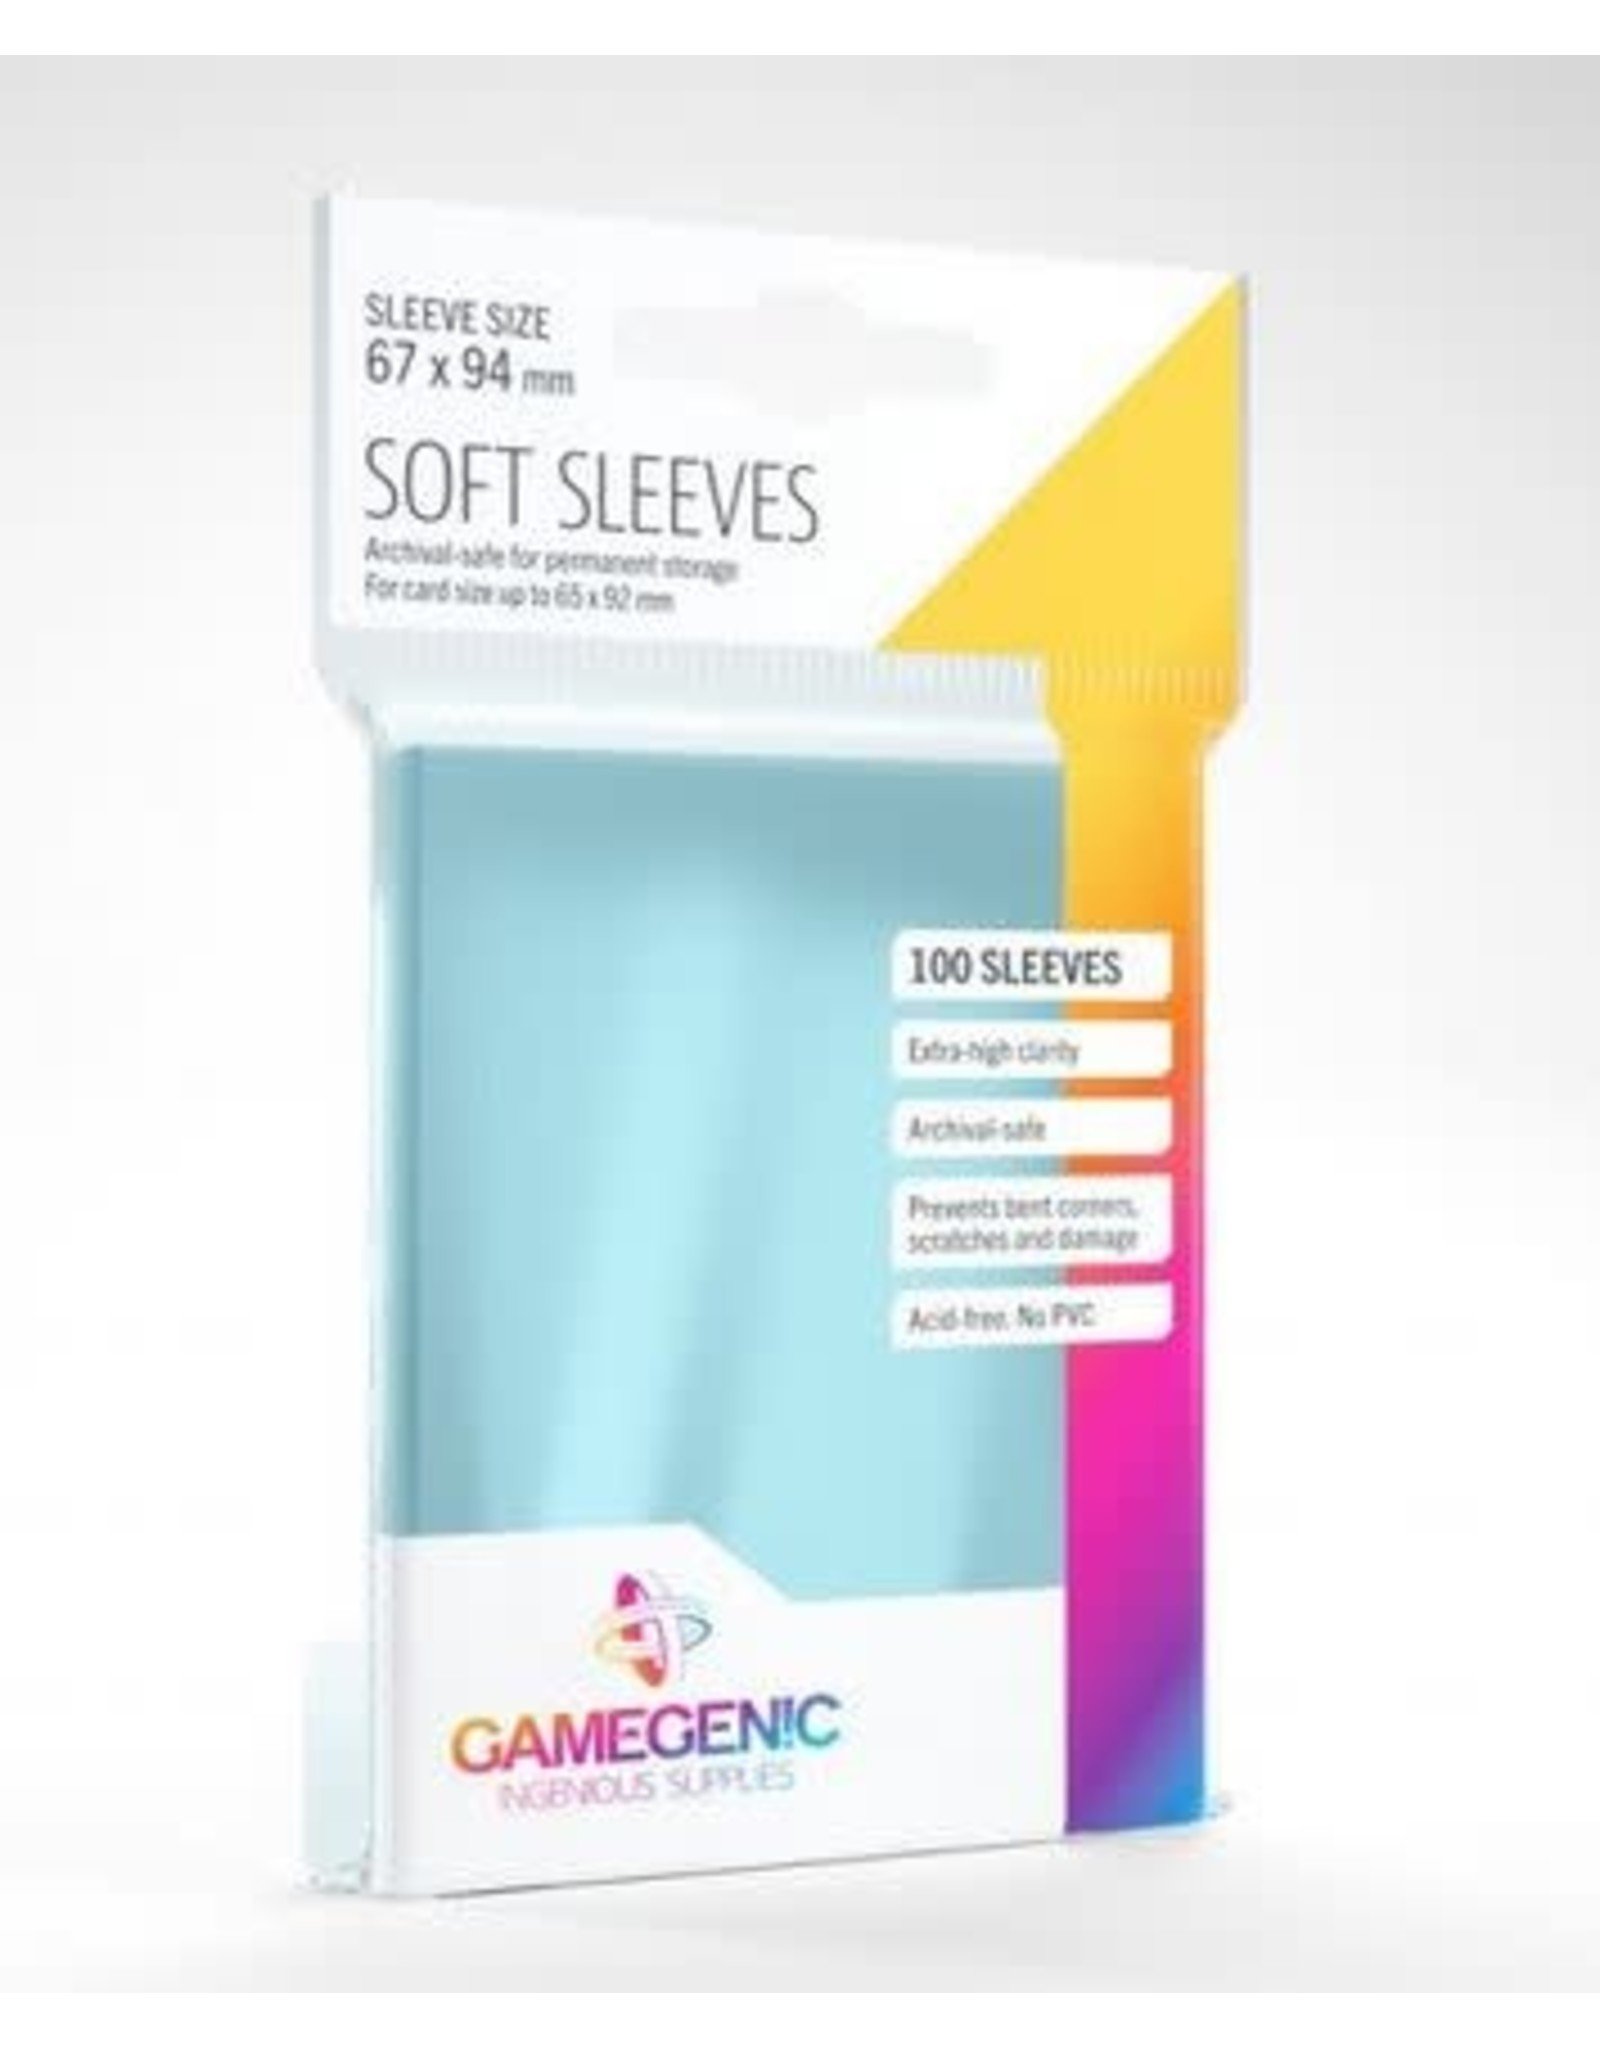 Gamegenic Soft Sleeves